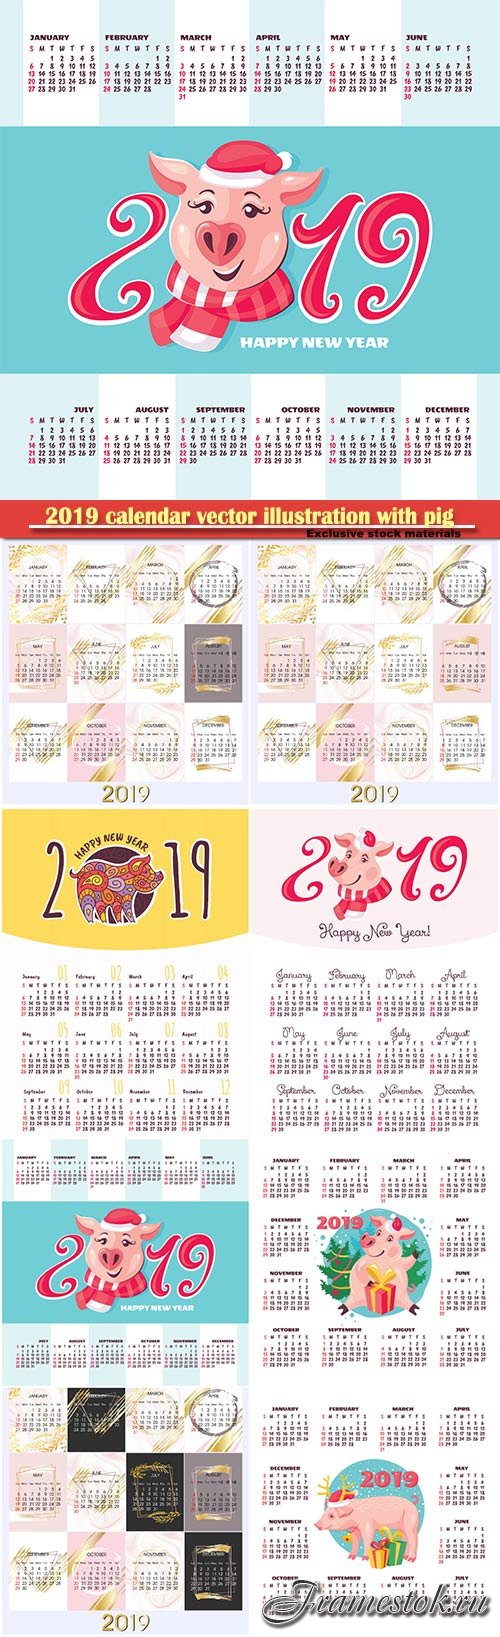 2019 calendar vector illustration with pig